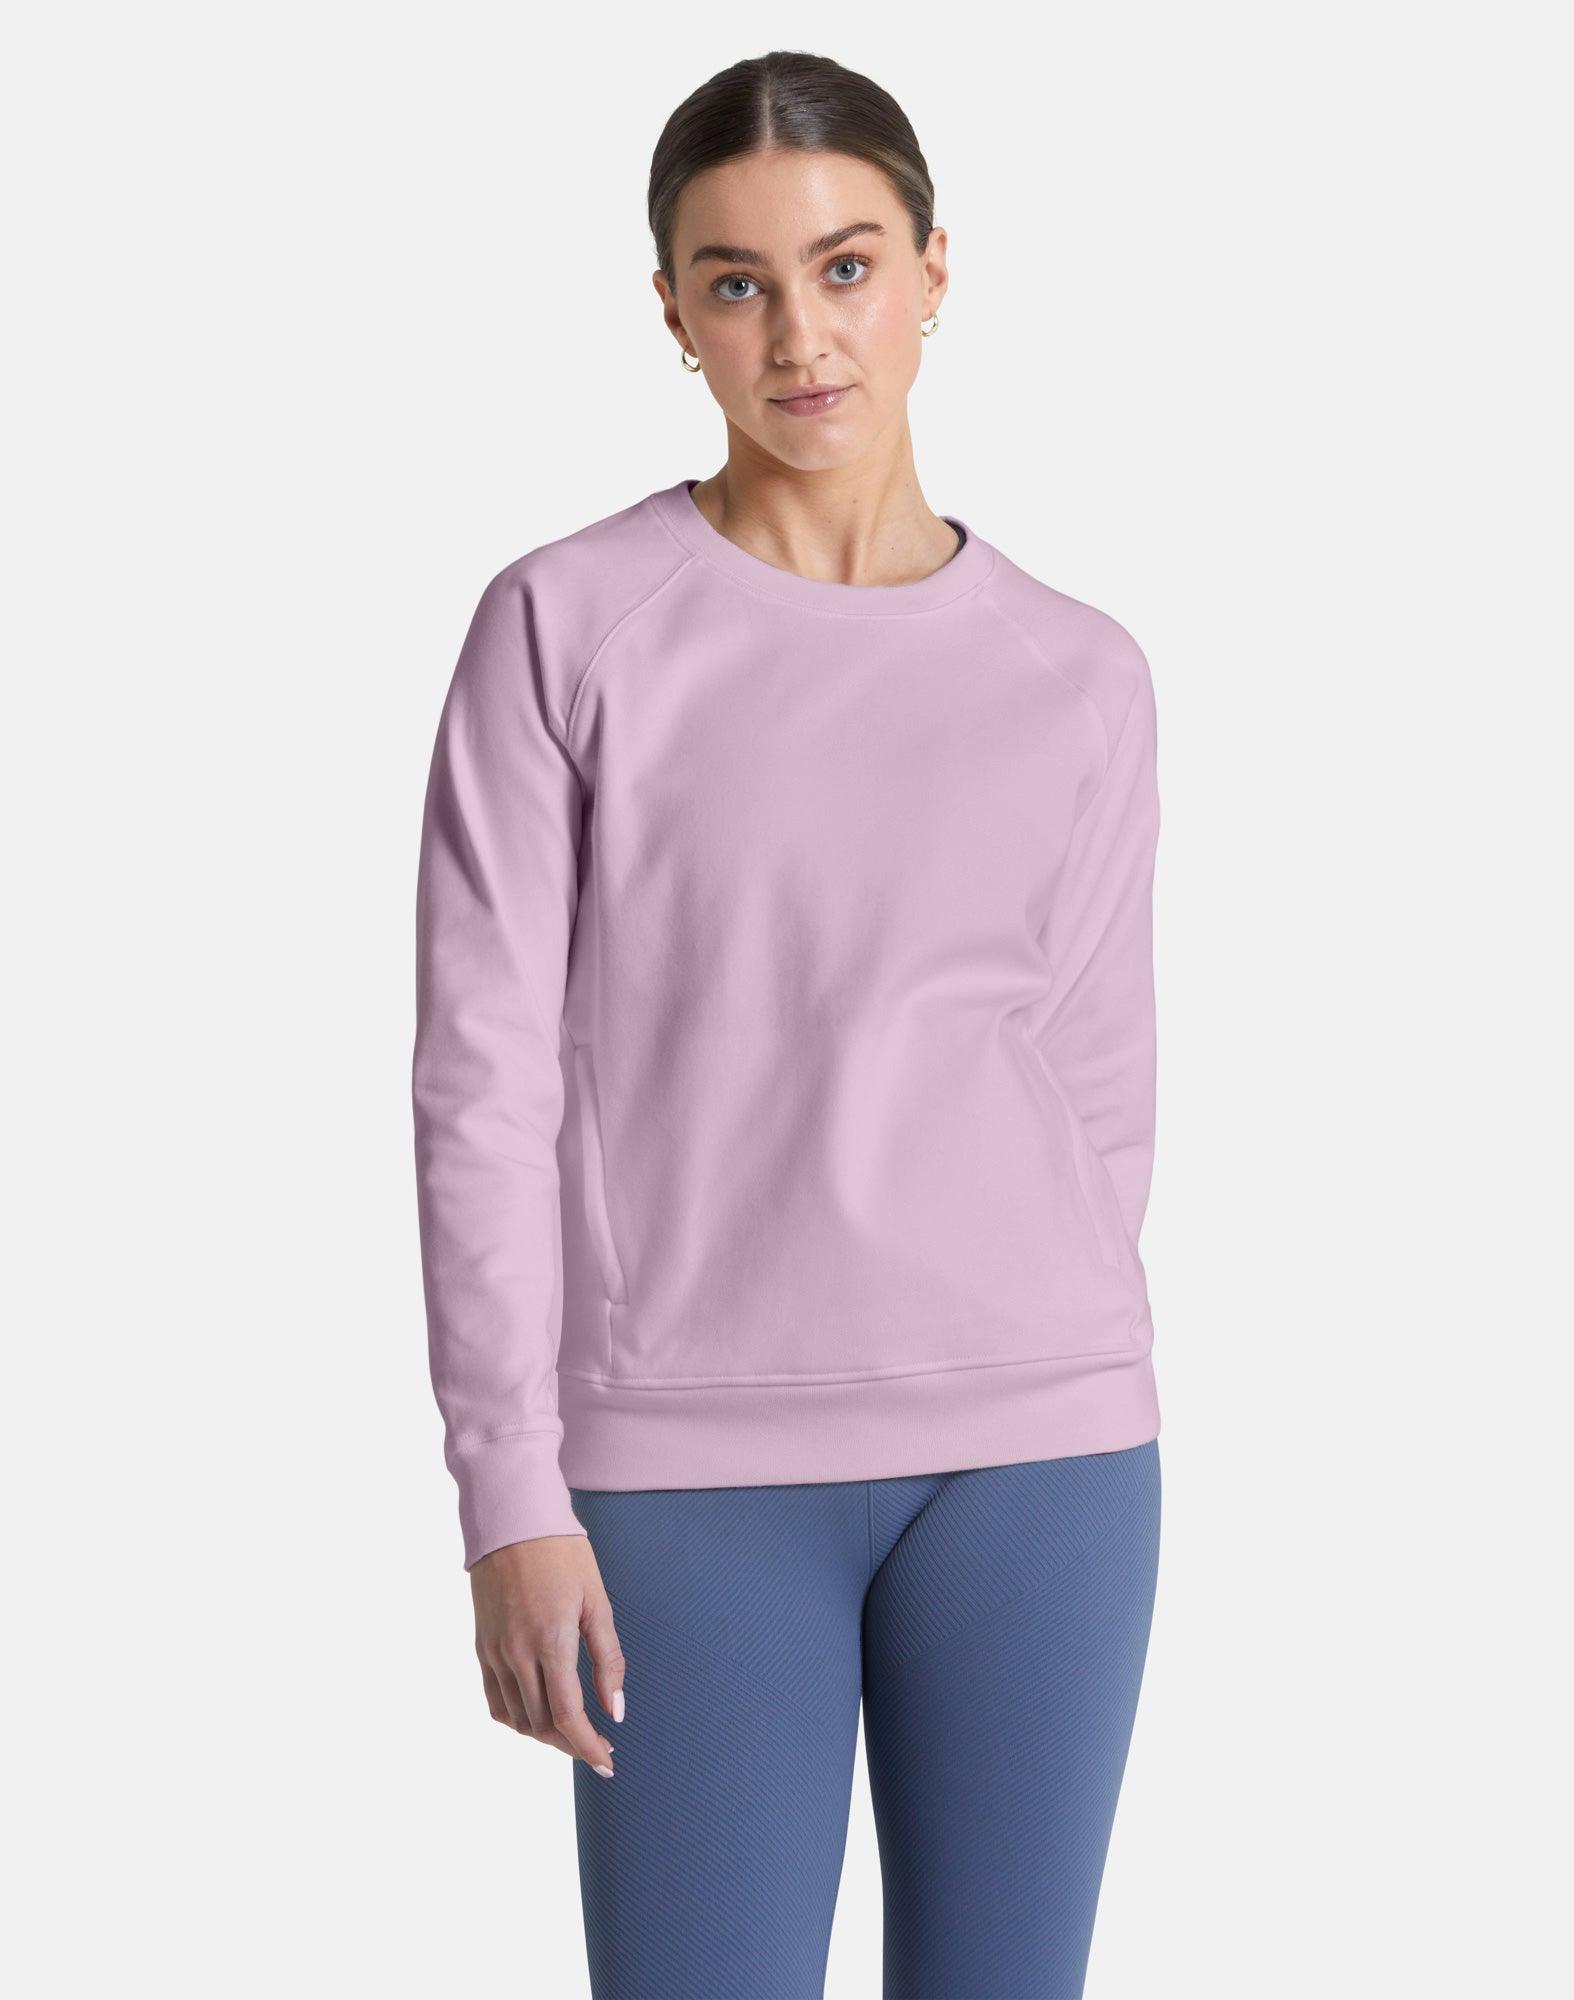 Essential Crew in Pale Pink - Sweatshirts - Gym+Coffee